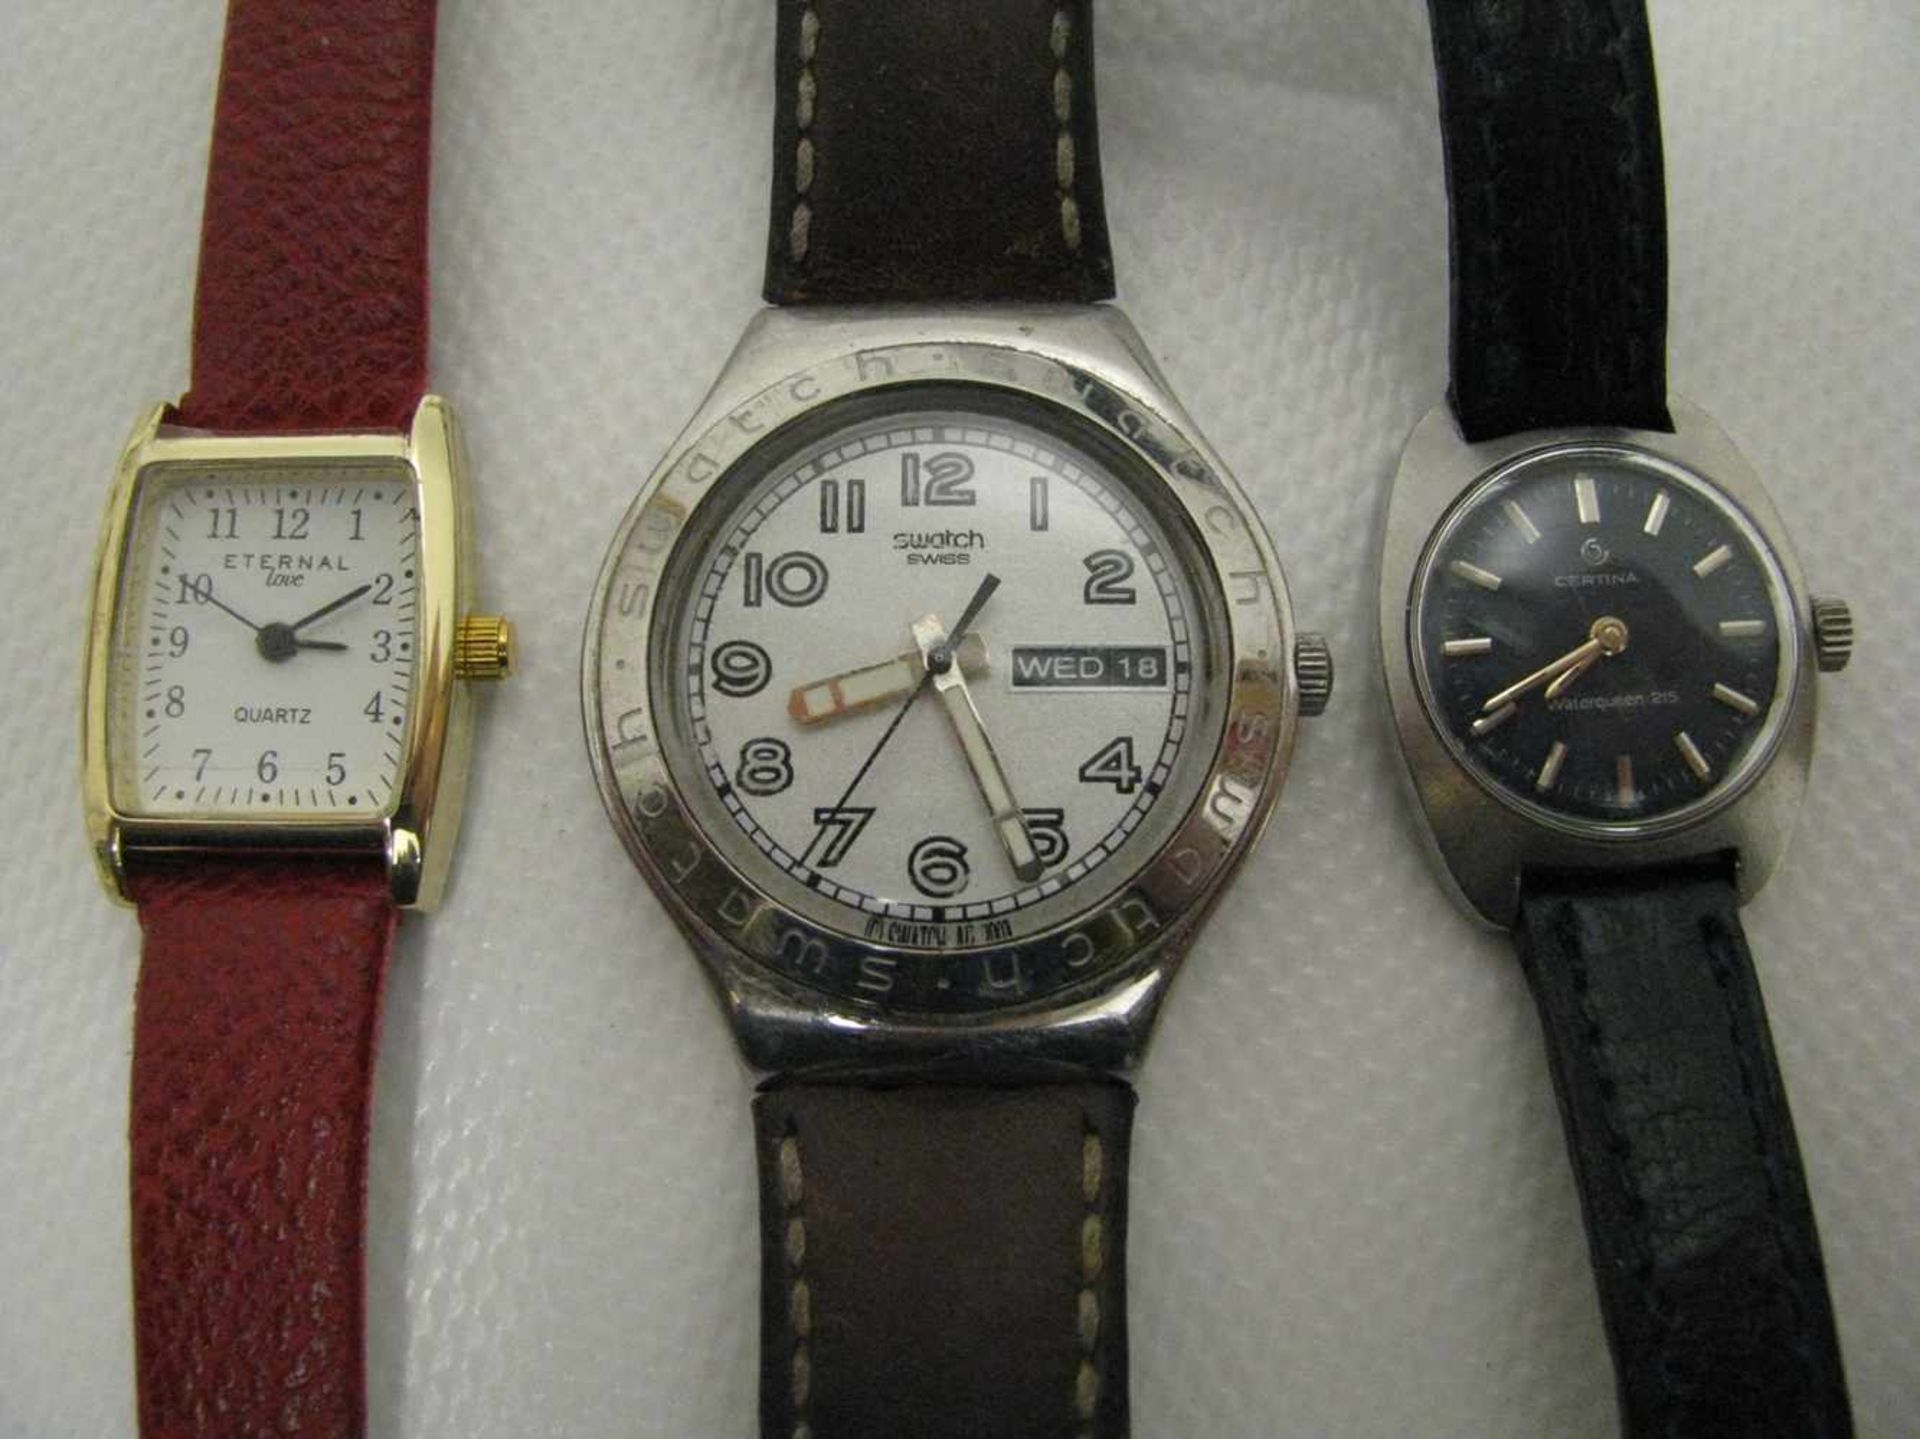 3 diverse Armbanduhren, Eternal/Certina/Swatch, Quarzwerke.- - -19.00 % buyer's premium on the